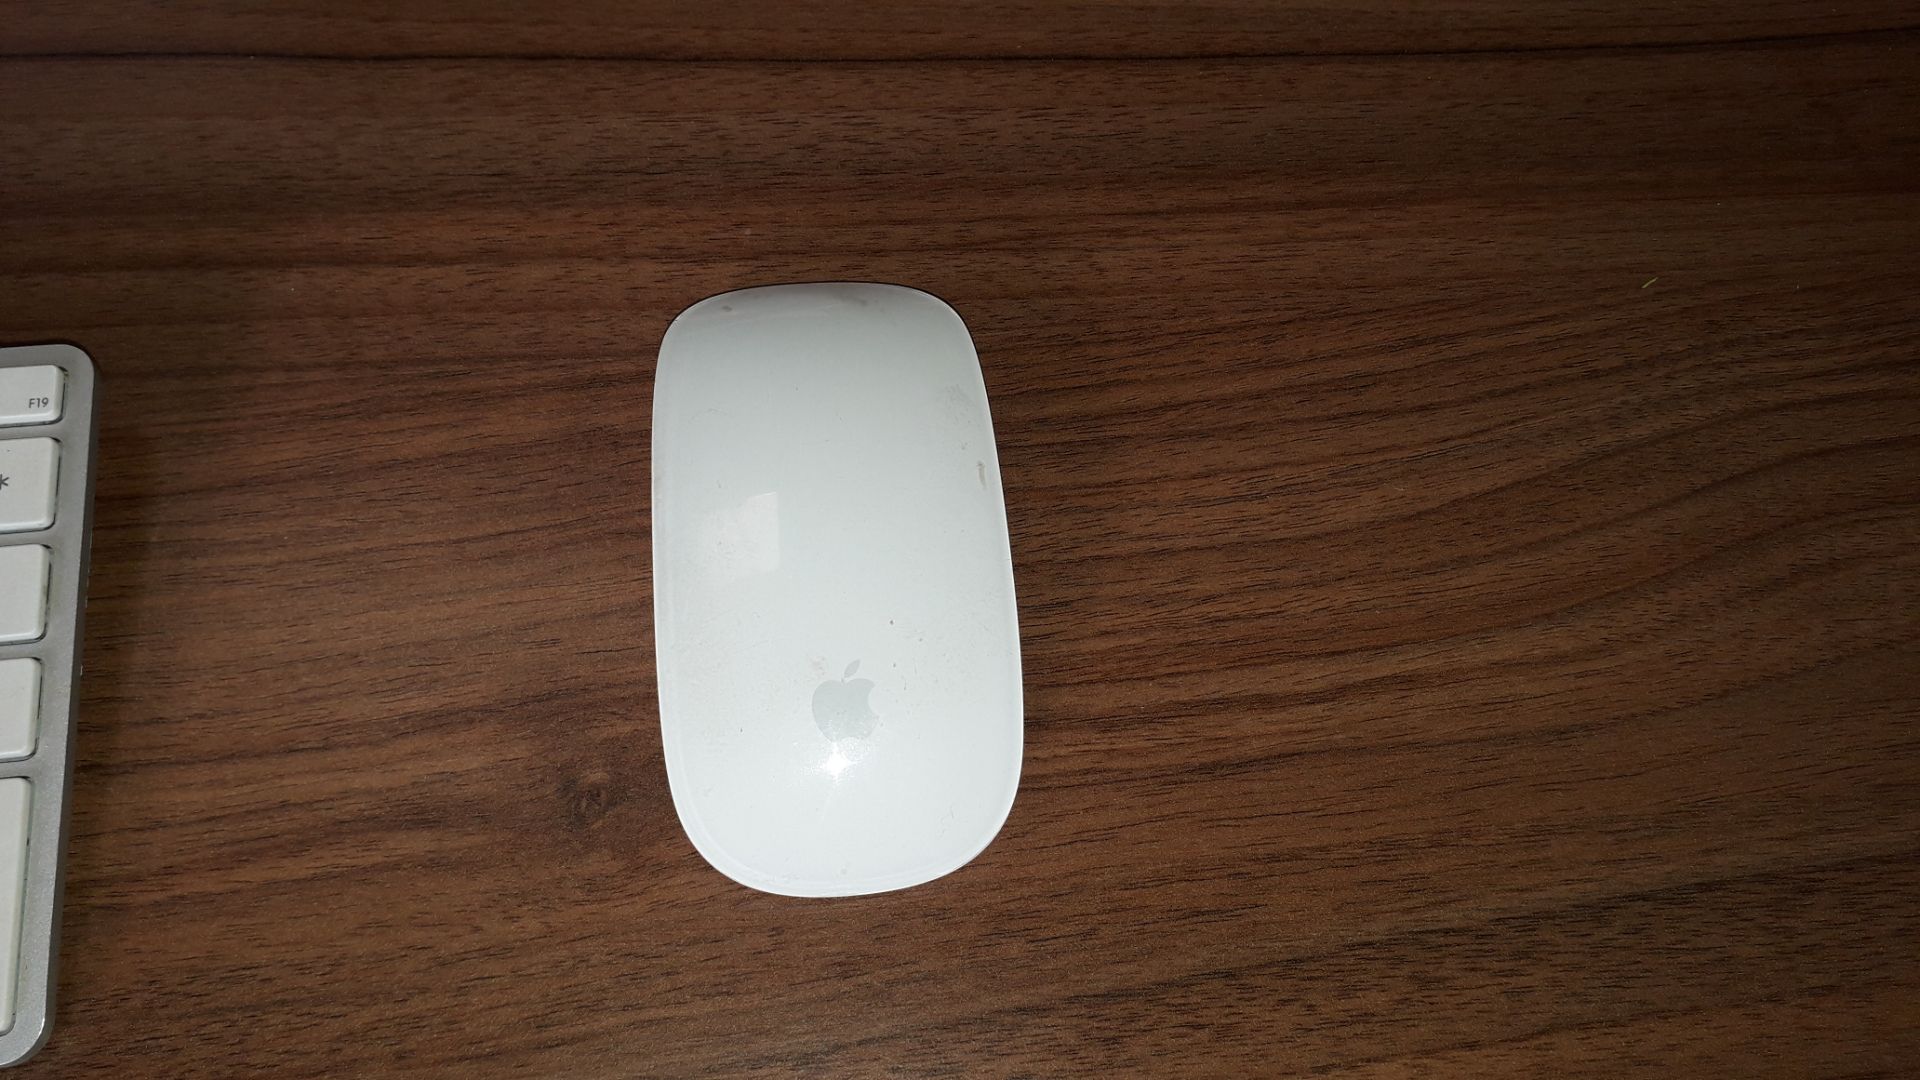 Apple iMac 21.5 inch 2.7GHz Core i5, 4GB RAM 1TB H - Image 5 of 8